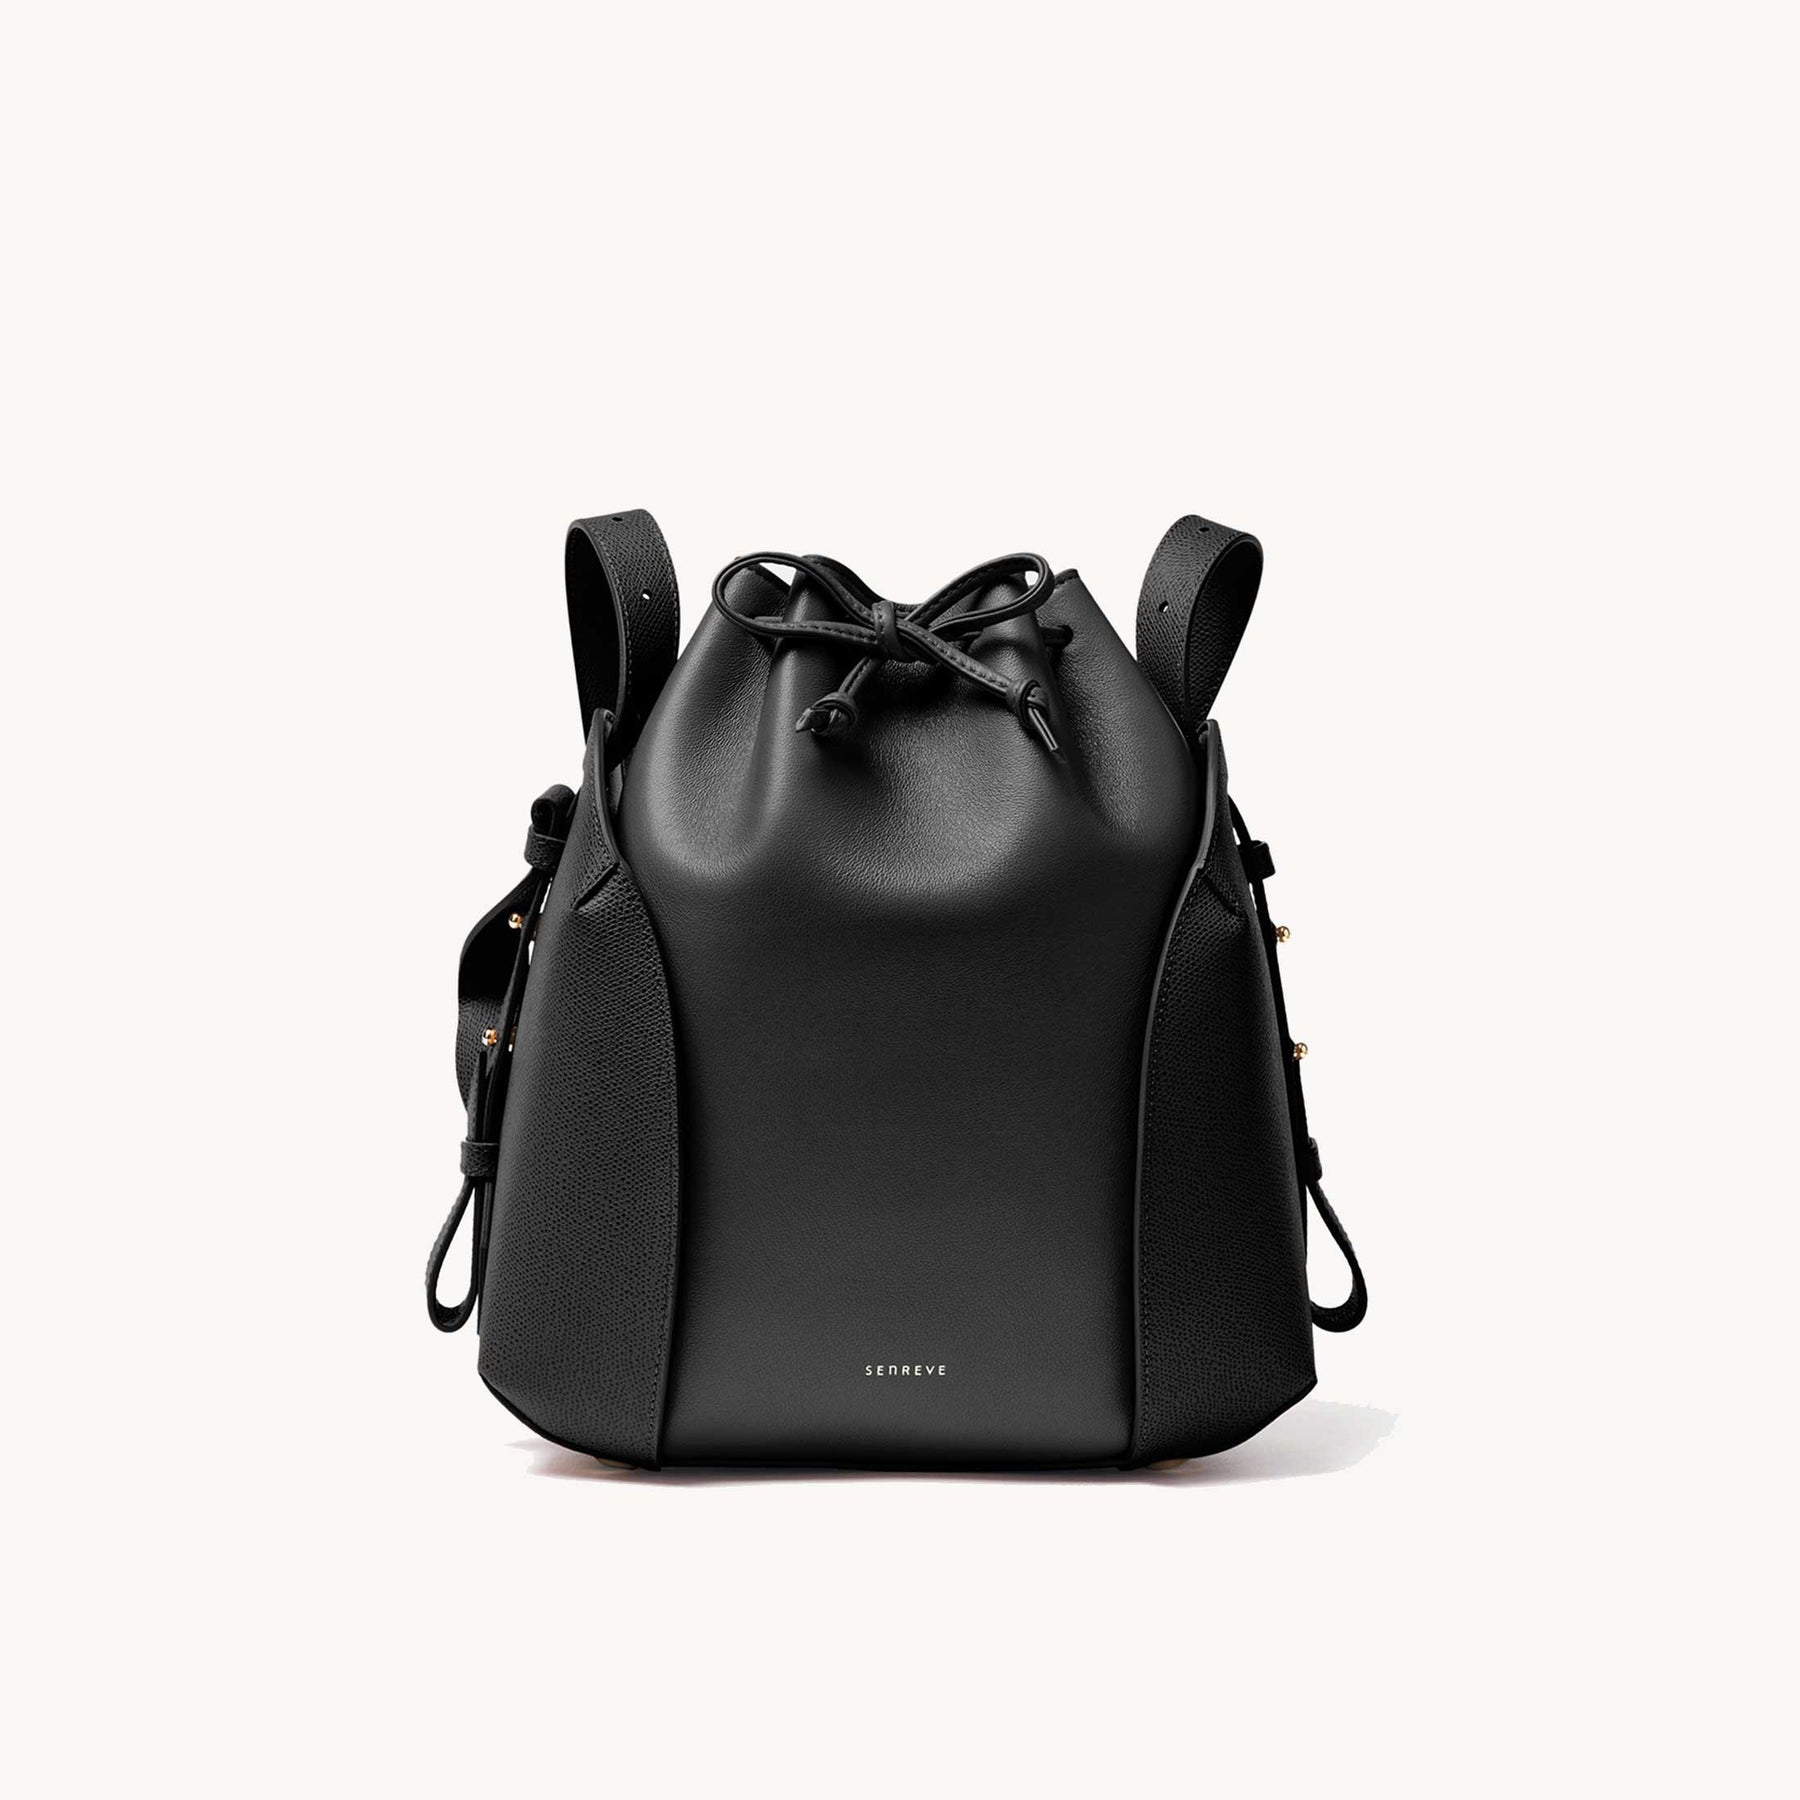 Senreve Aria Mix-leather Belt Bag In Merlot